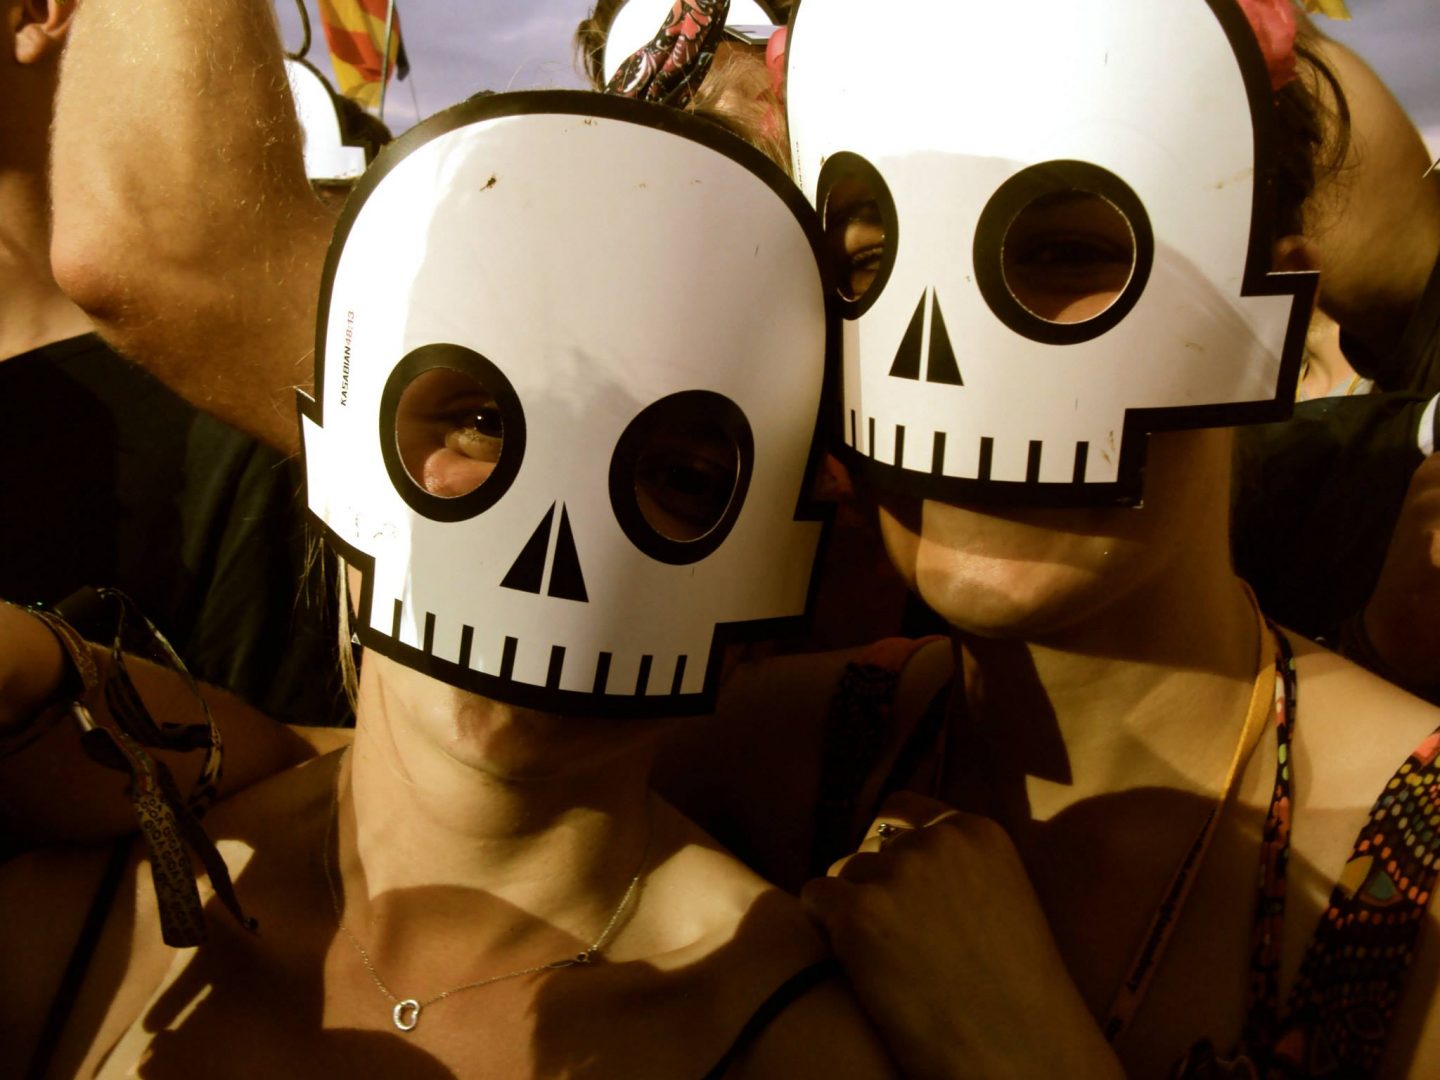 Wearing skeleton masks for Kasabian at Glastonbury Festival